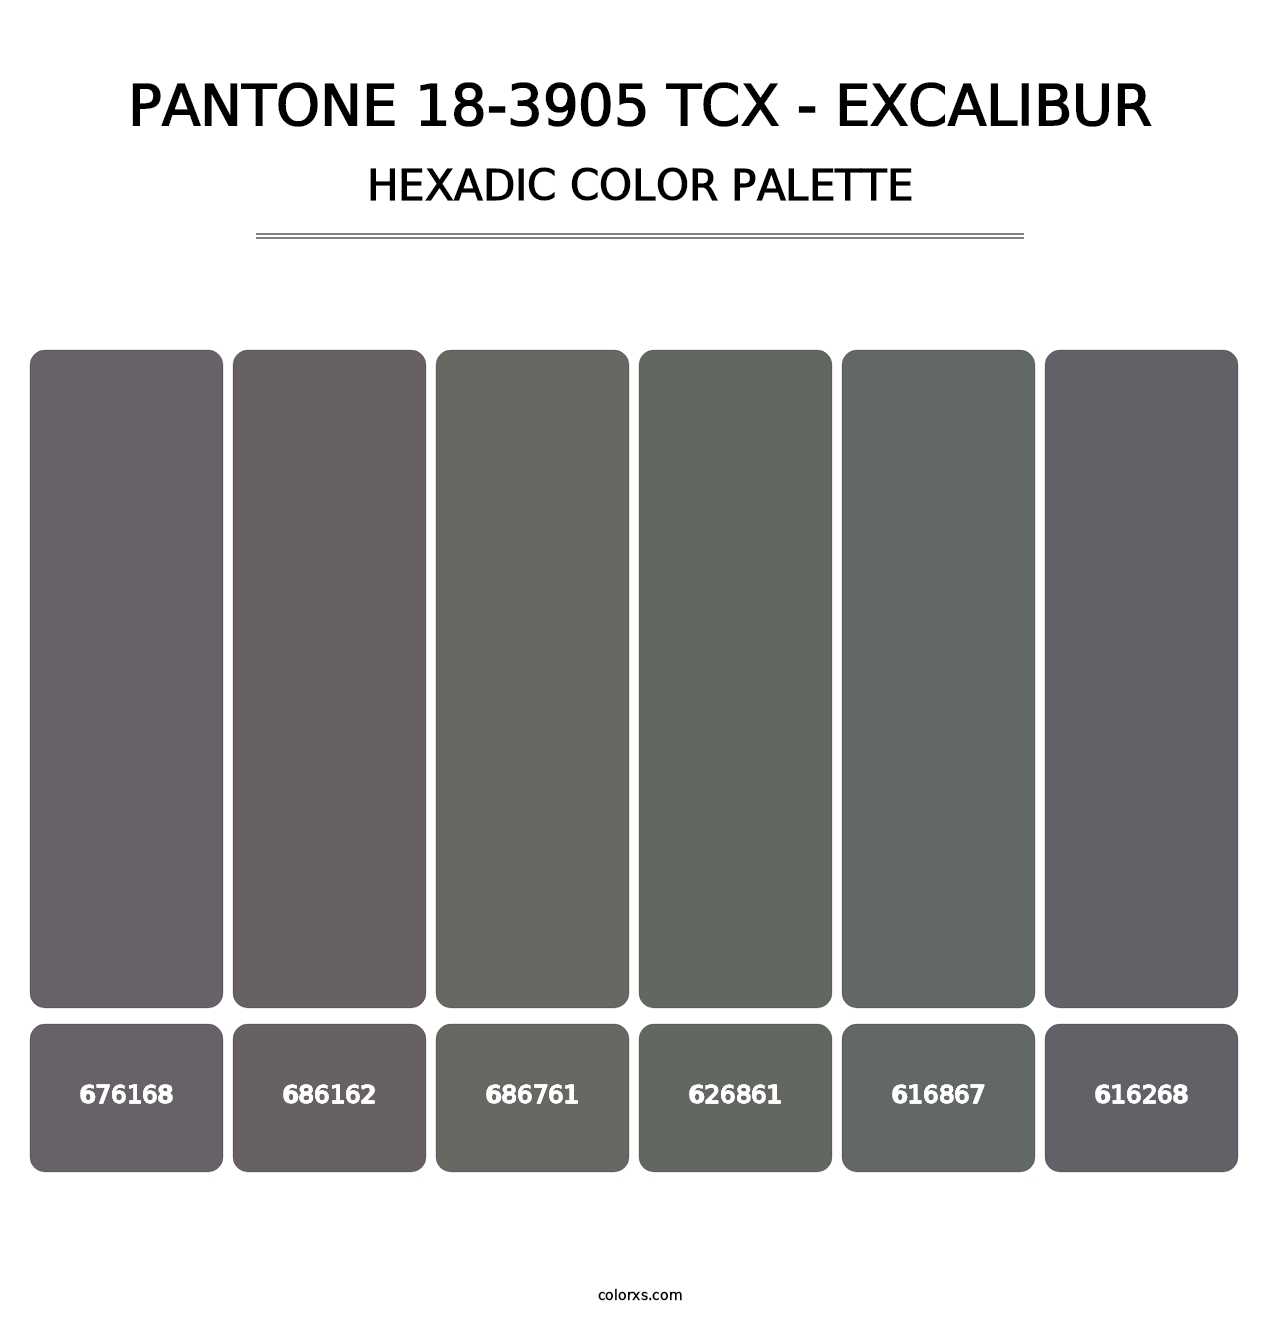 PANTONE 18-3905 TCX - Excalibur - Hexadic Color Palette